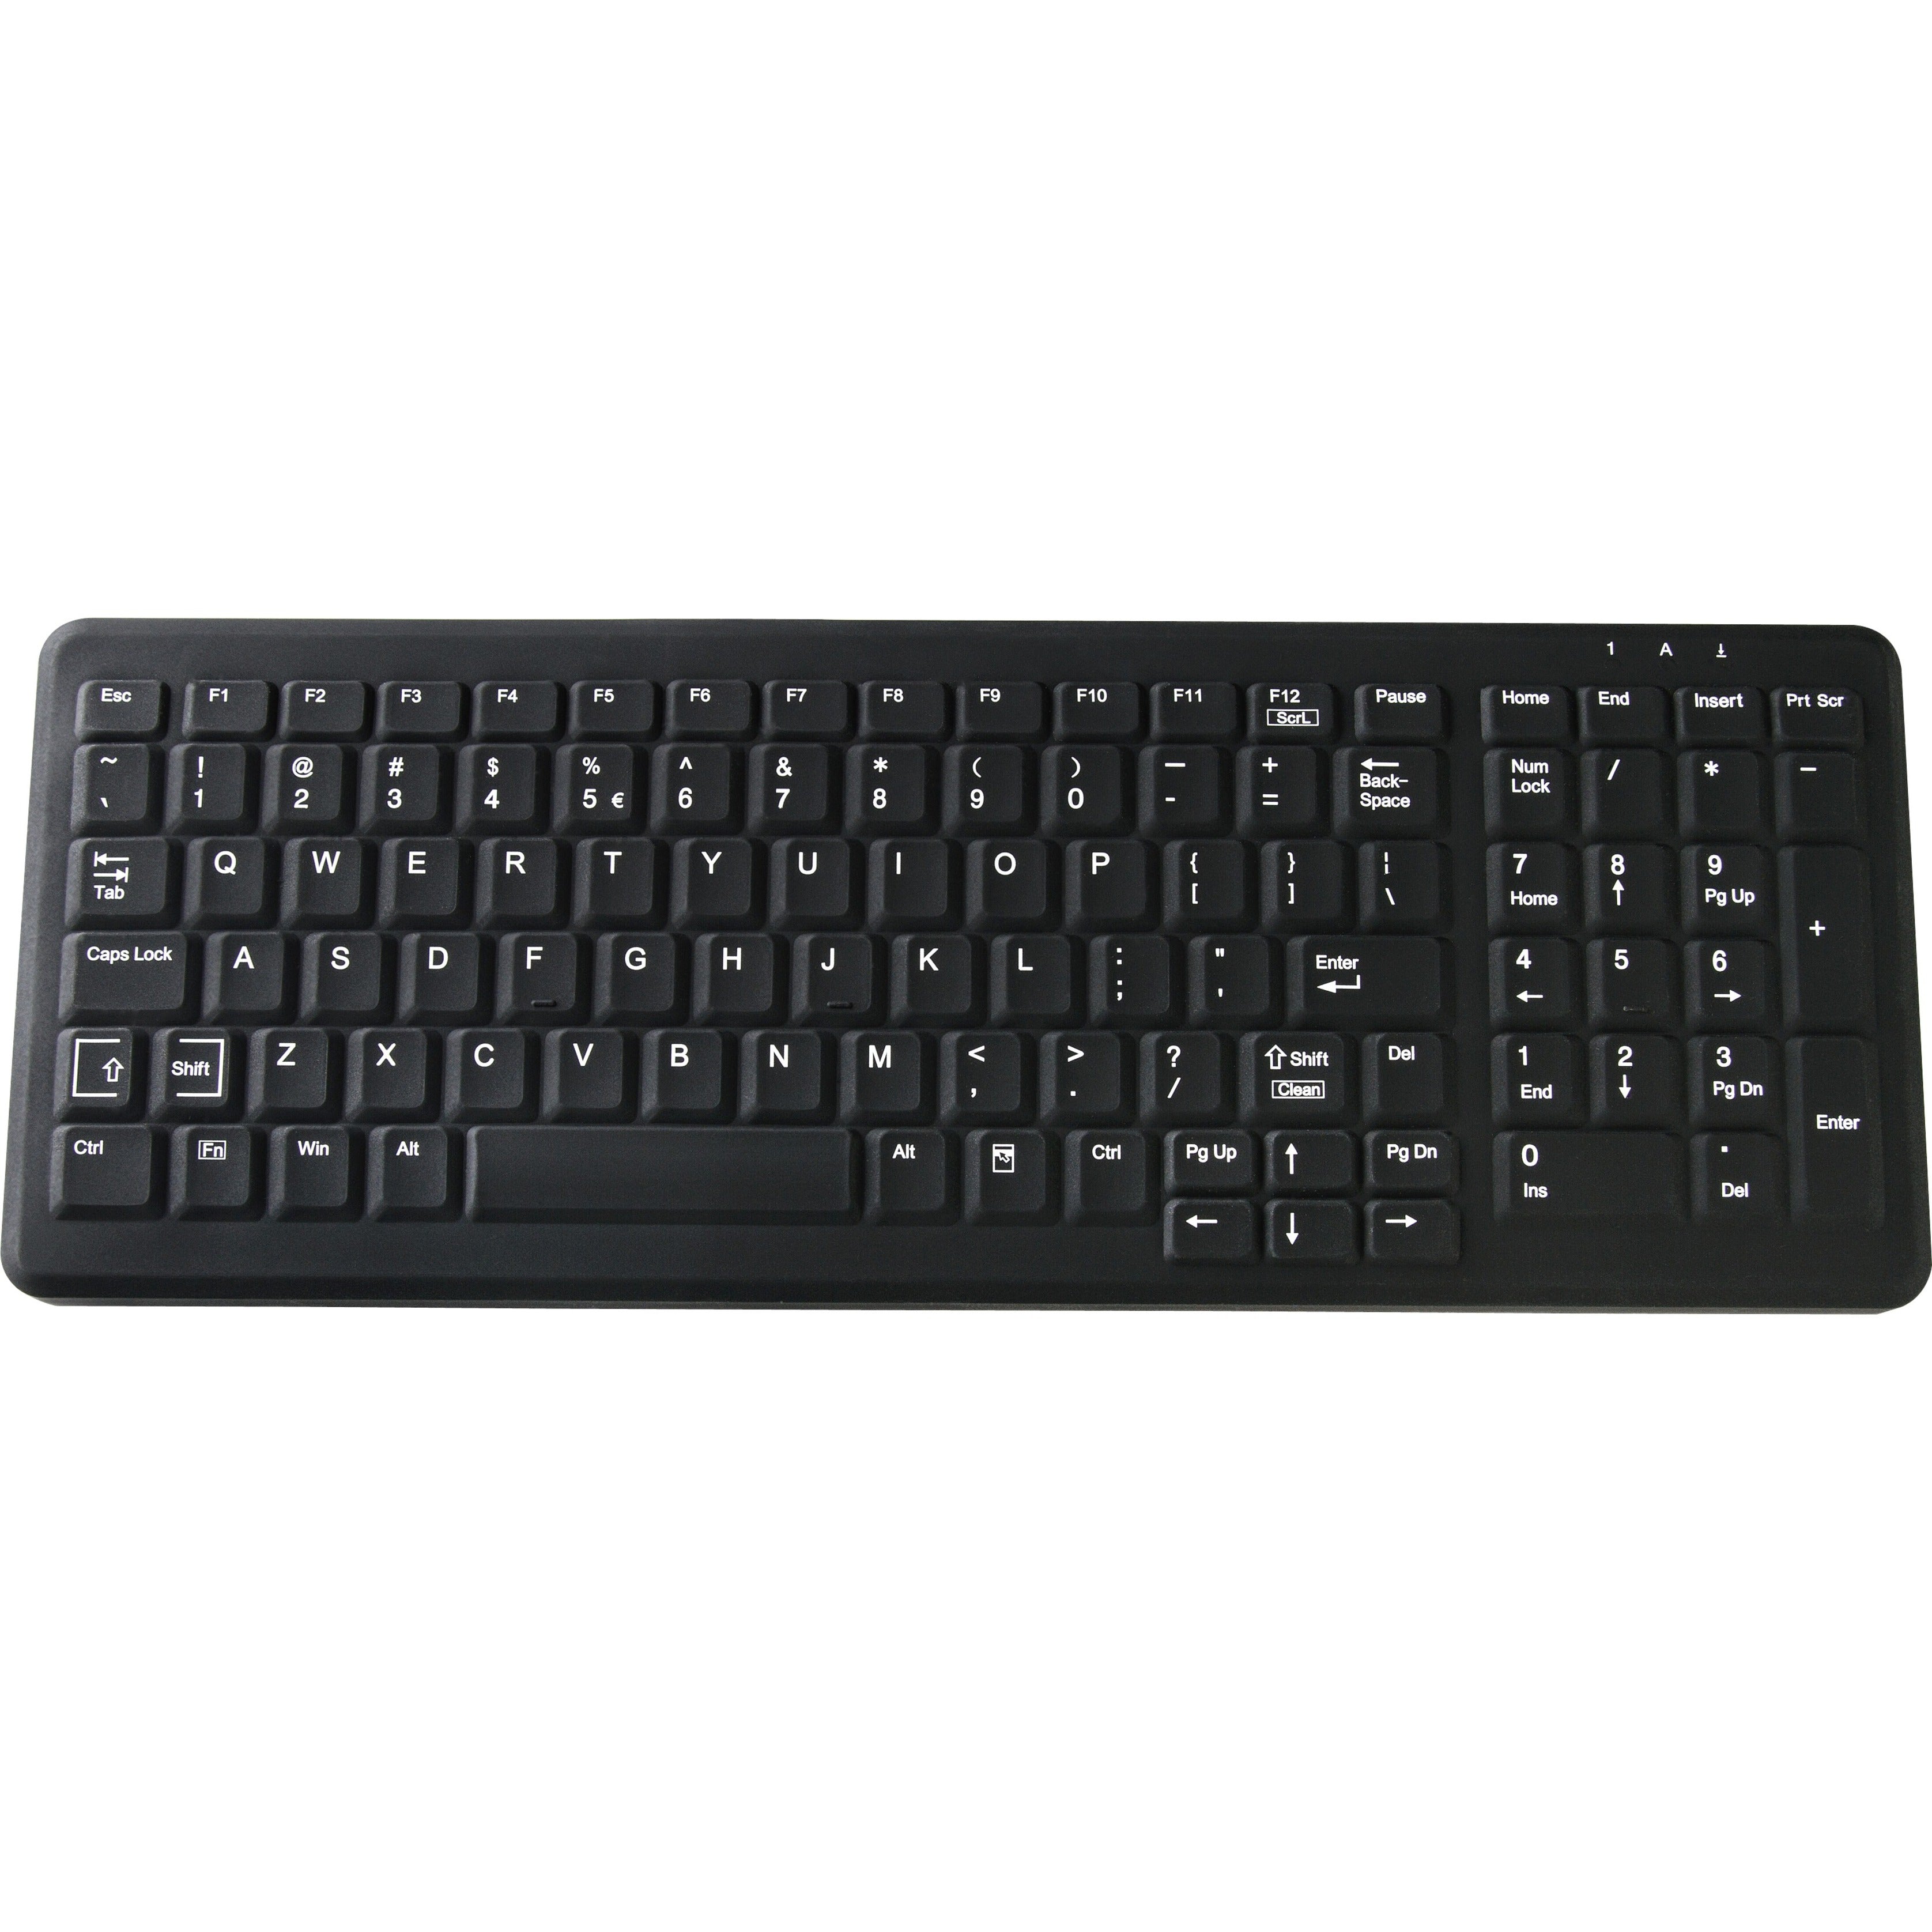 TG3 KBA-CK103S-BNUN-US CK103S Keyboard, QWERTY Layout, USB Cable Connectivity, Black